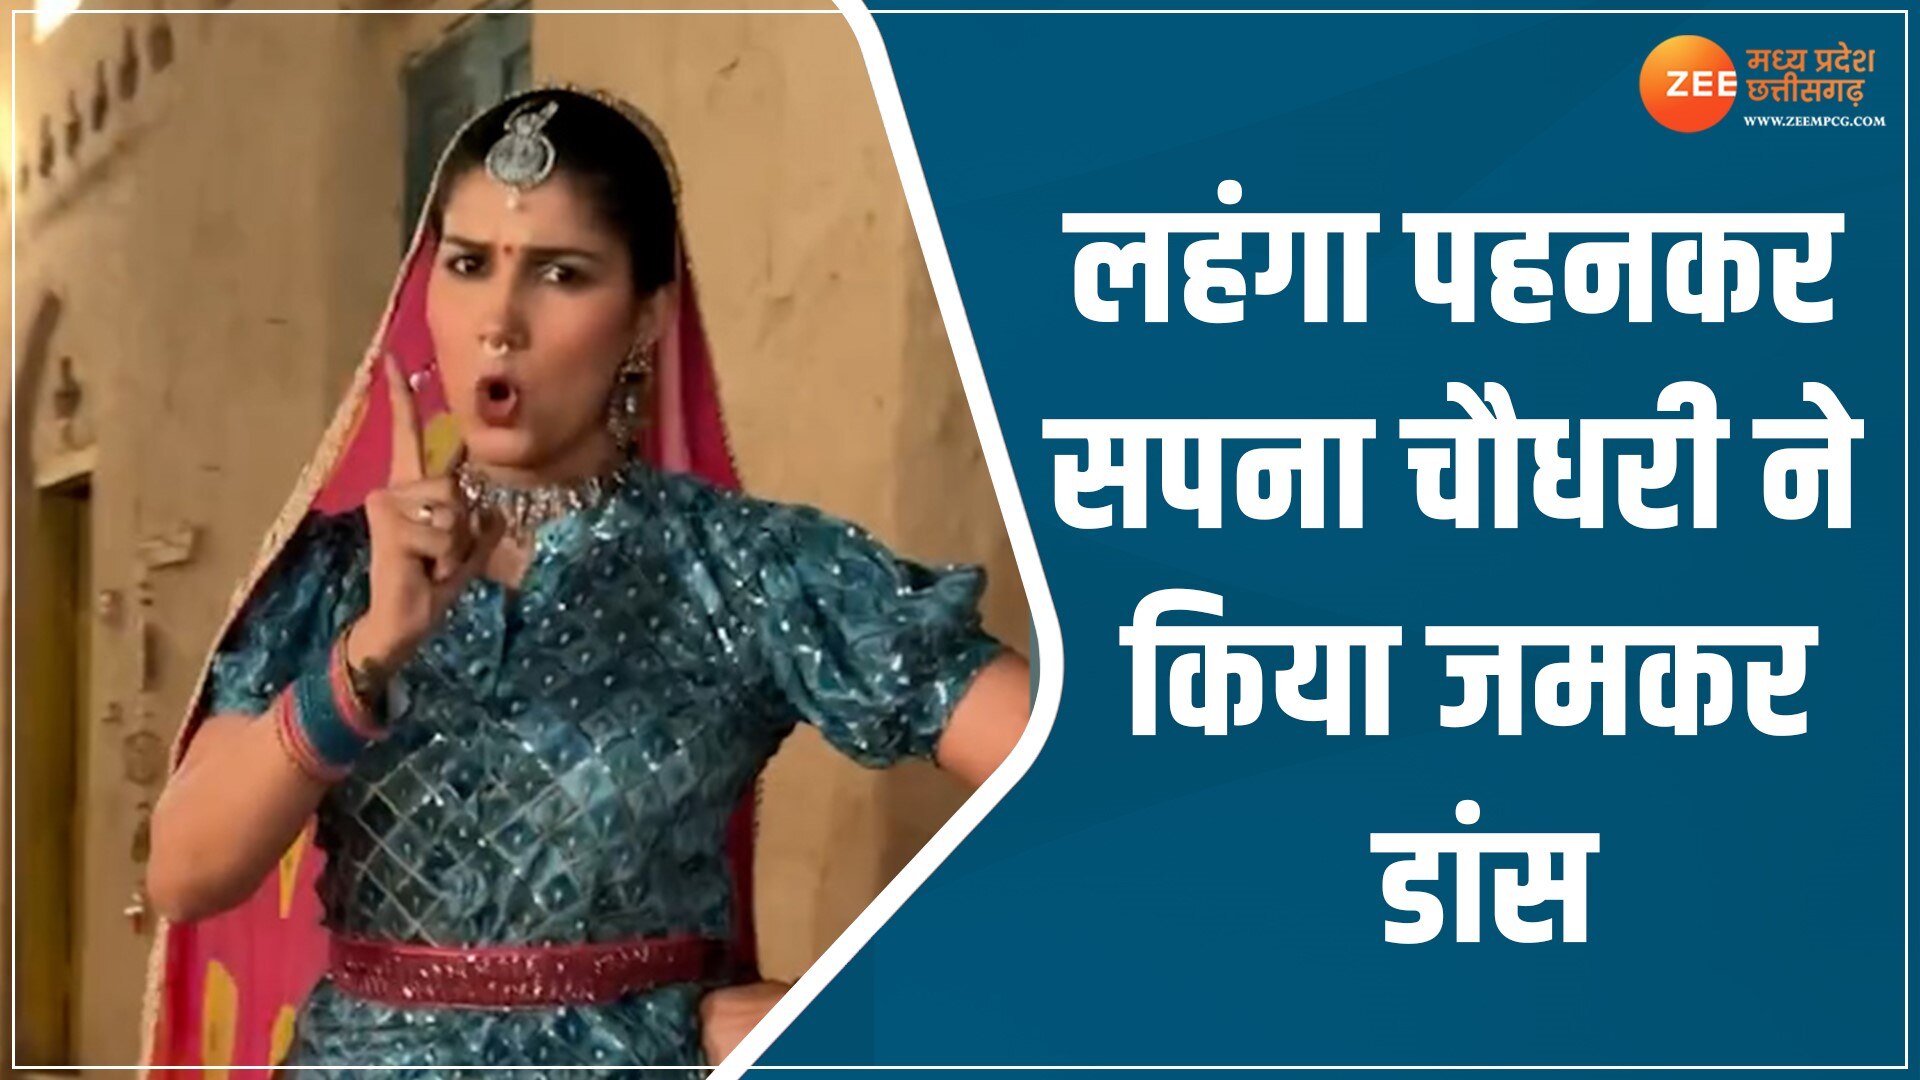 Sapna Choudhary danced fiercely wearing a lehenga the public went crazy  after seeing her dance | Viral Video: लहंगा पहनकर सपना चौधरी ने किया जमकर  डांस, ठुमके देख पब्लिक हुई बावली |